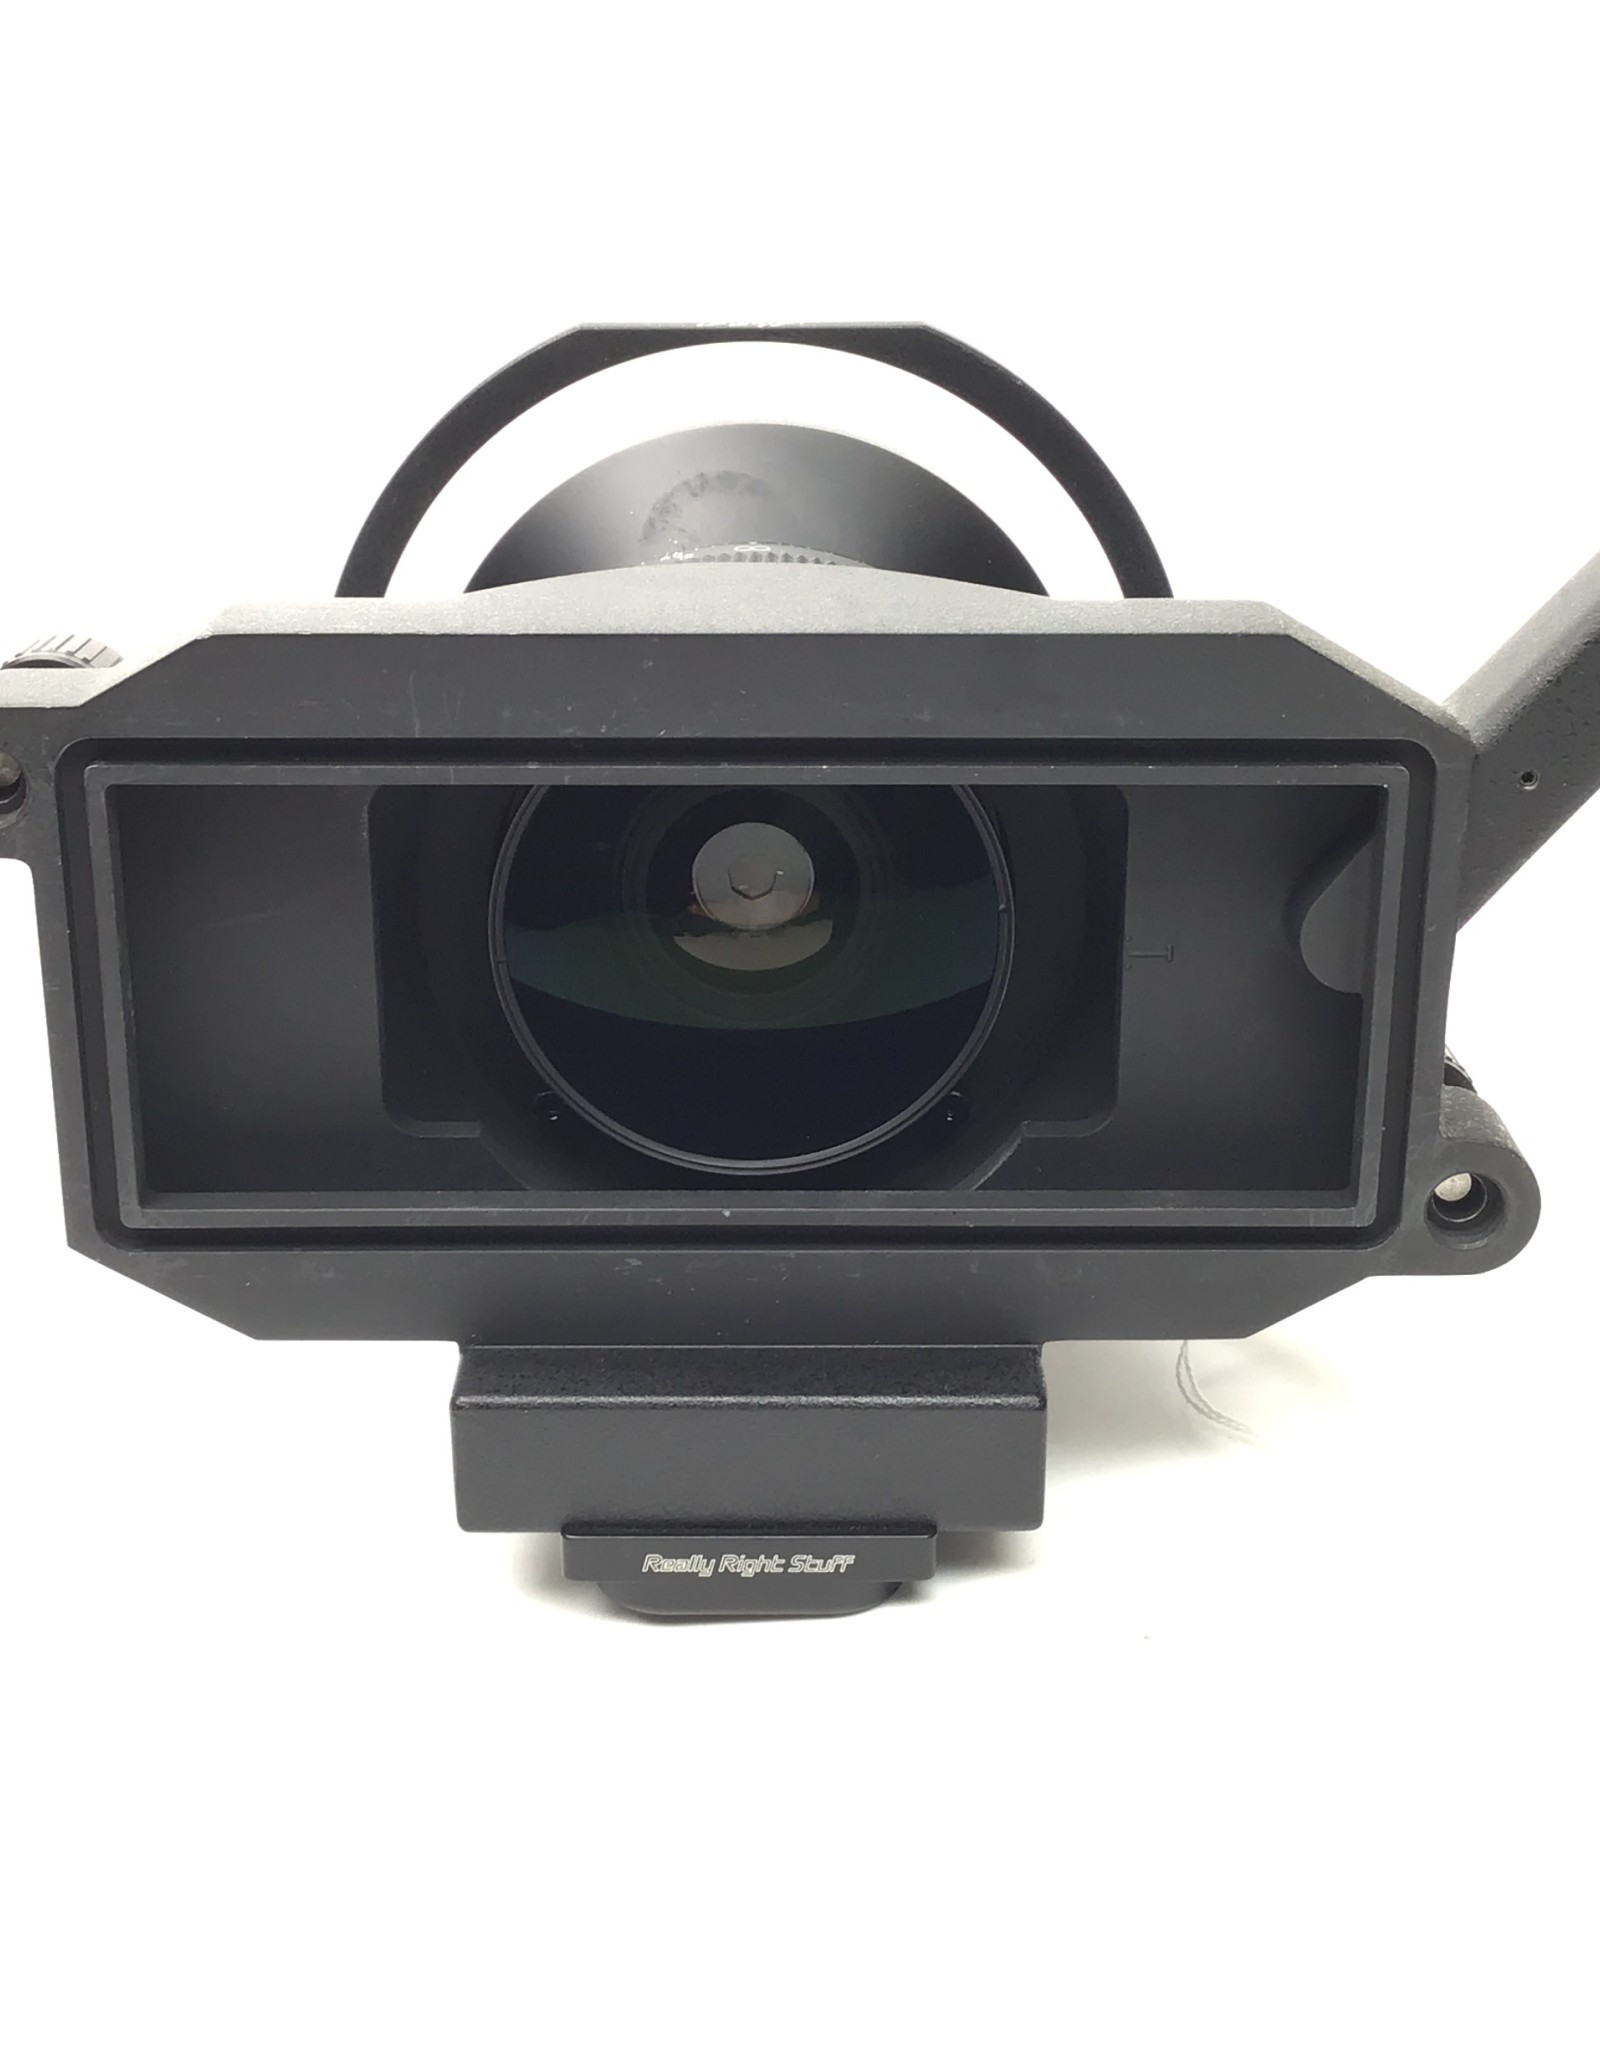 Linhof Linhof Technorama Super-Angulon XL 90mm f/5.6 Lens Unit w/ Finder  Used Good